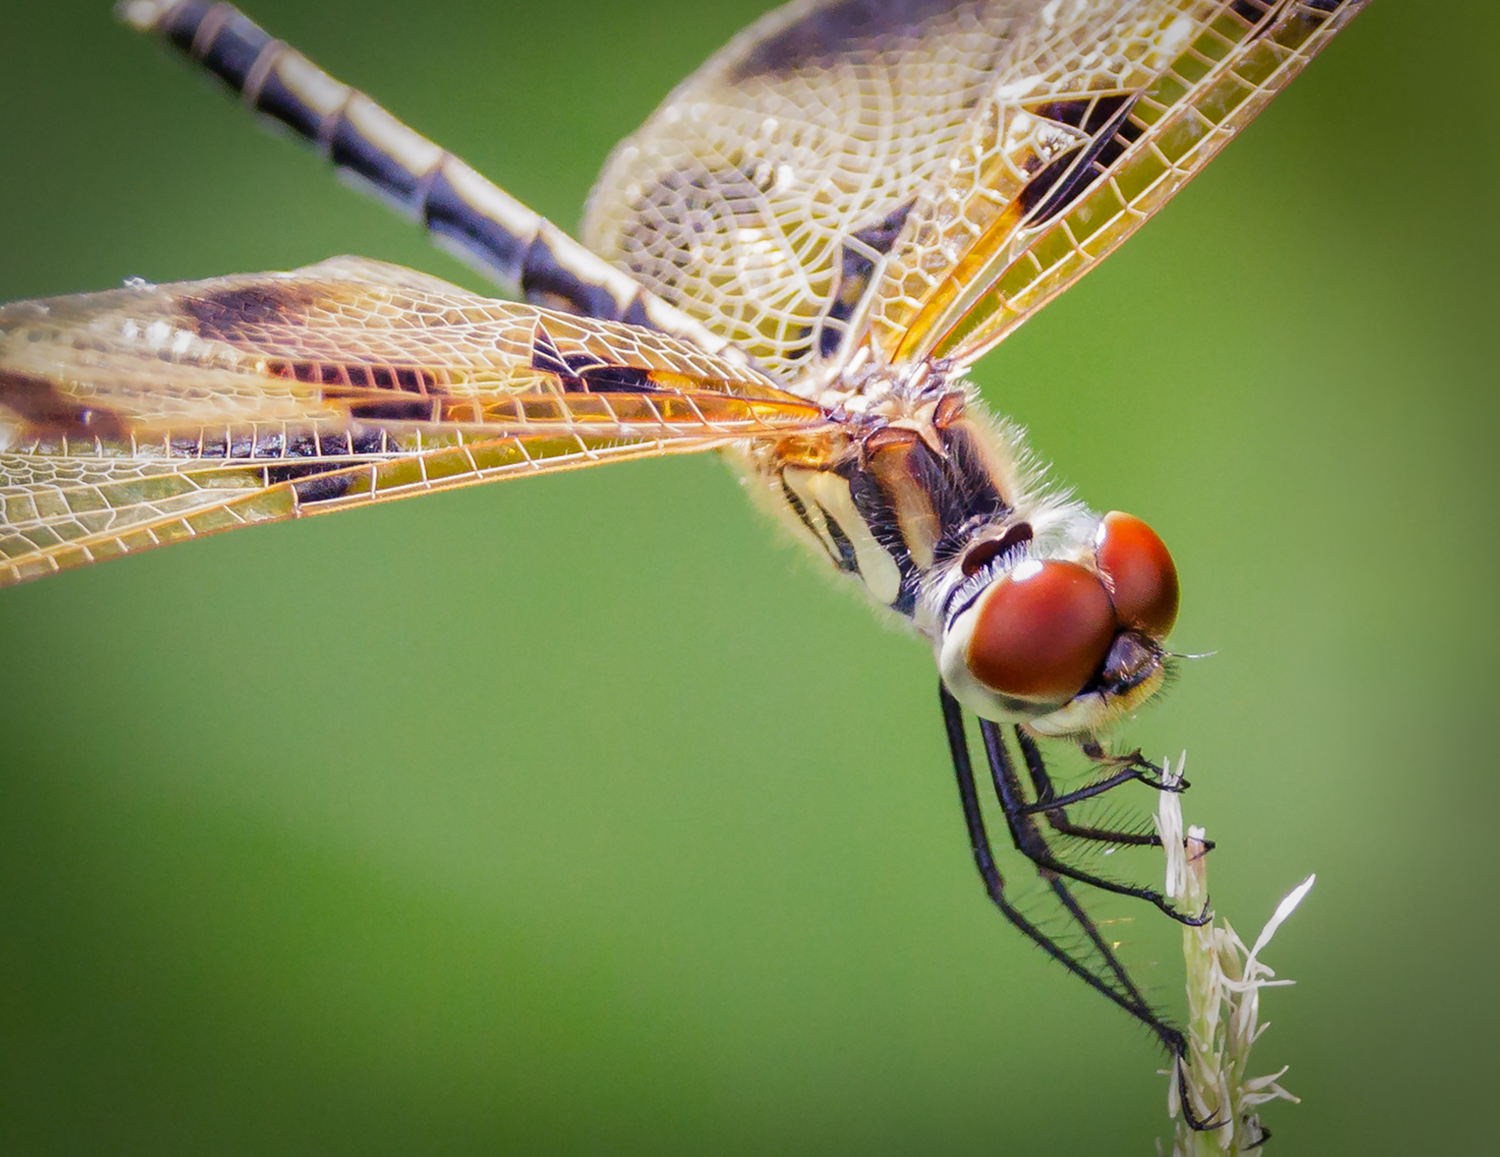 Everglades Dragonfly - Score 94